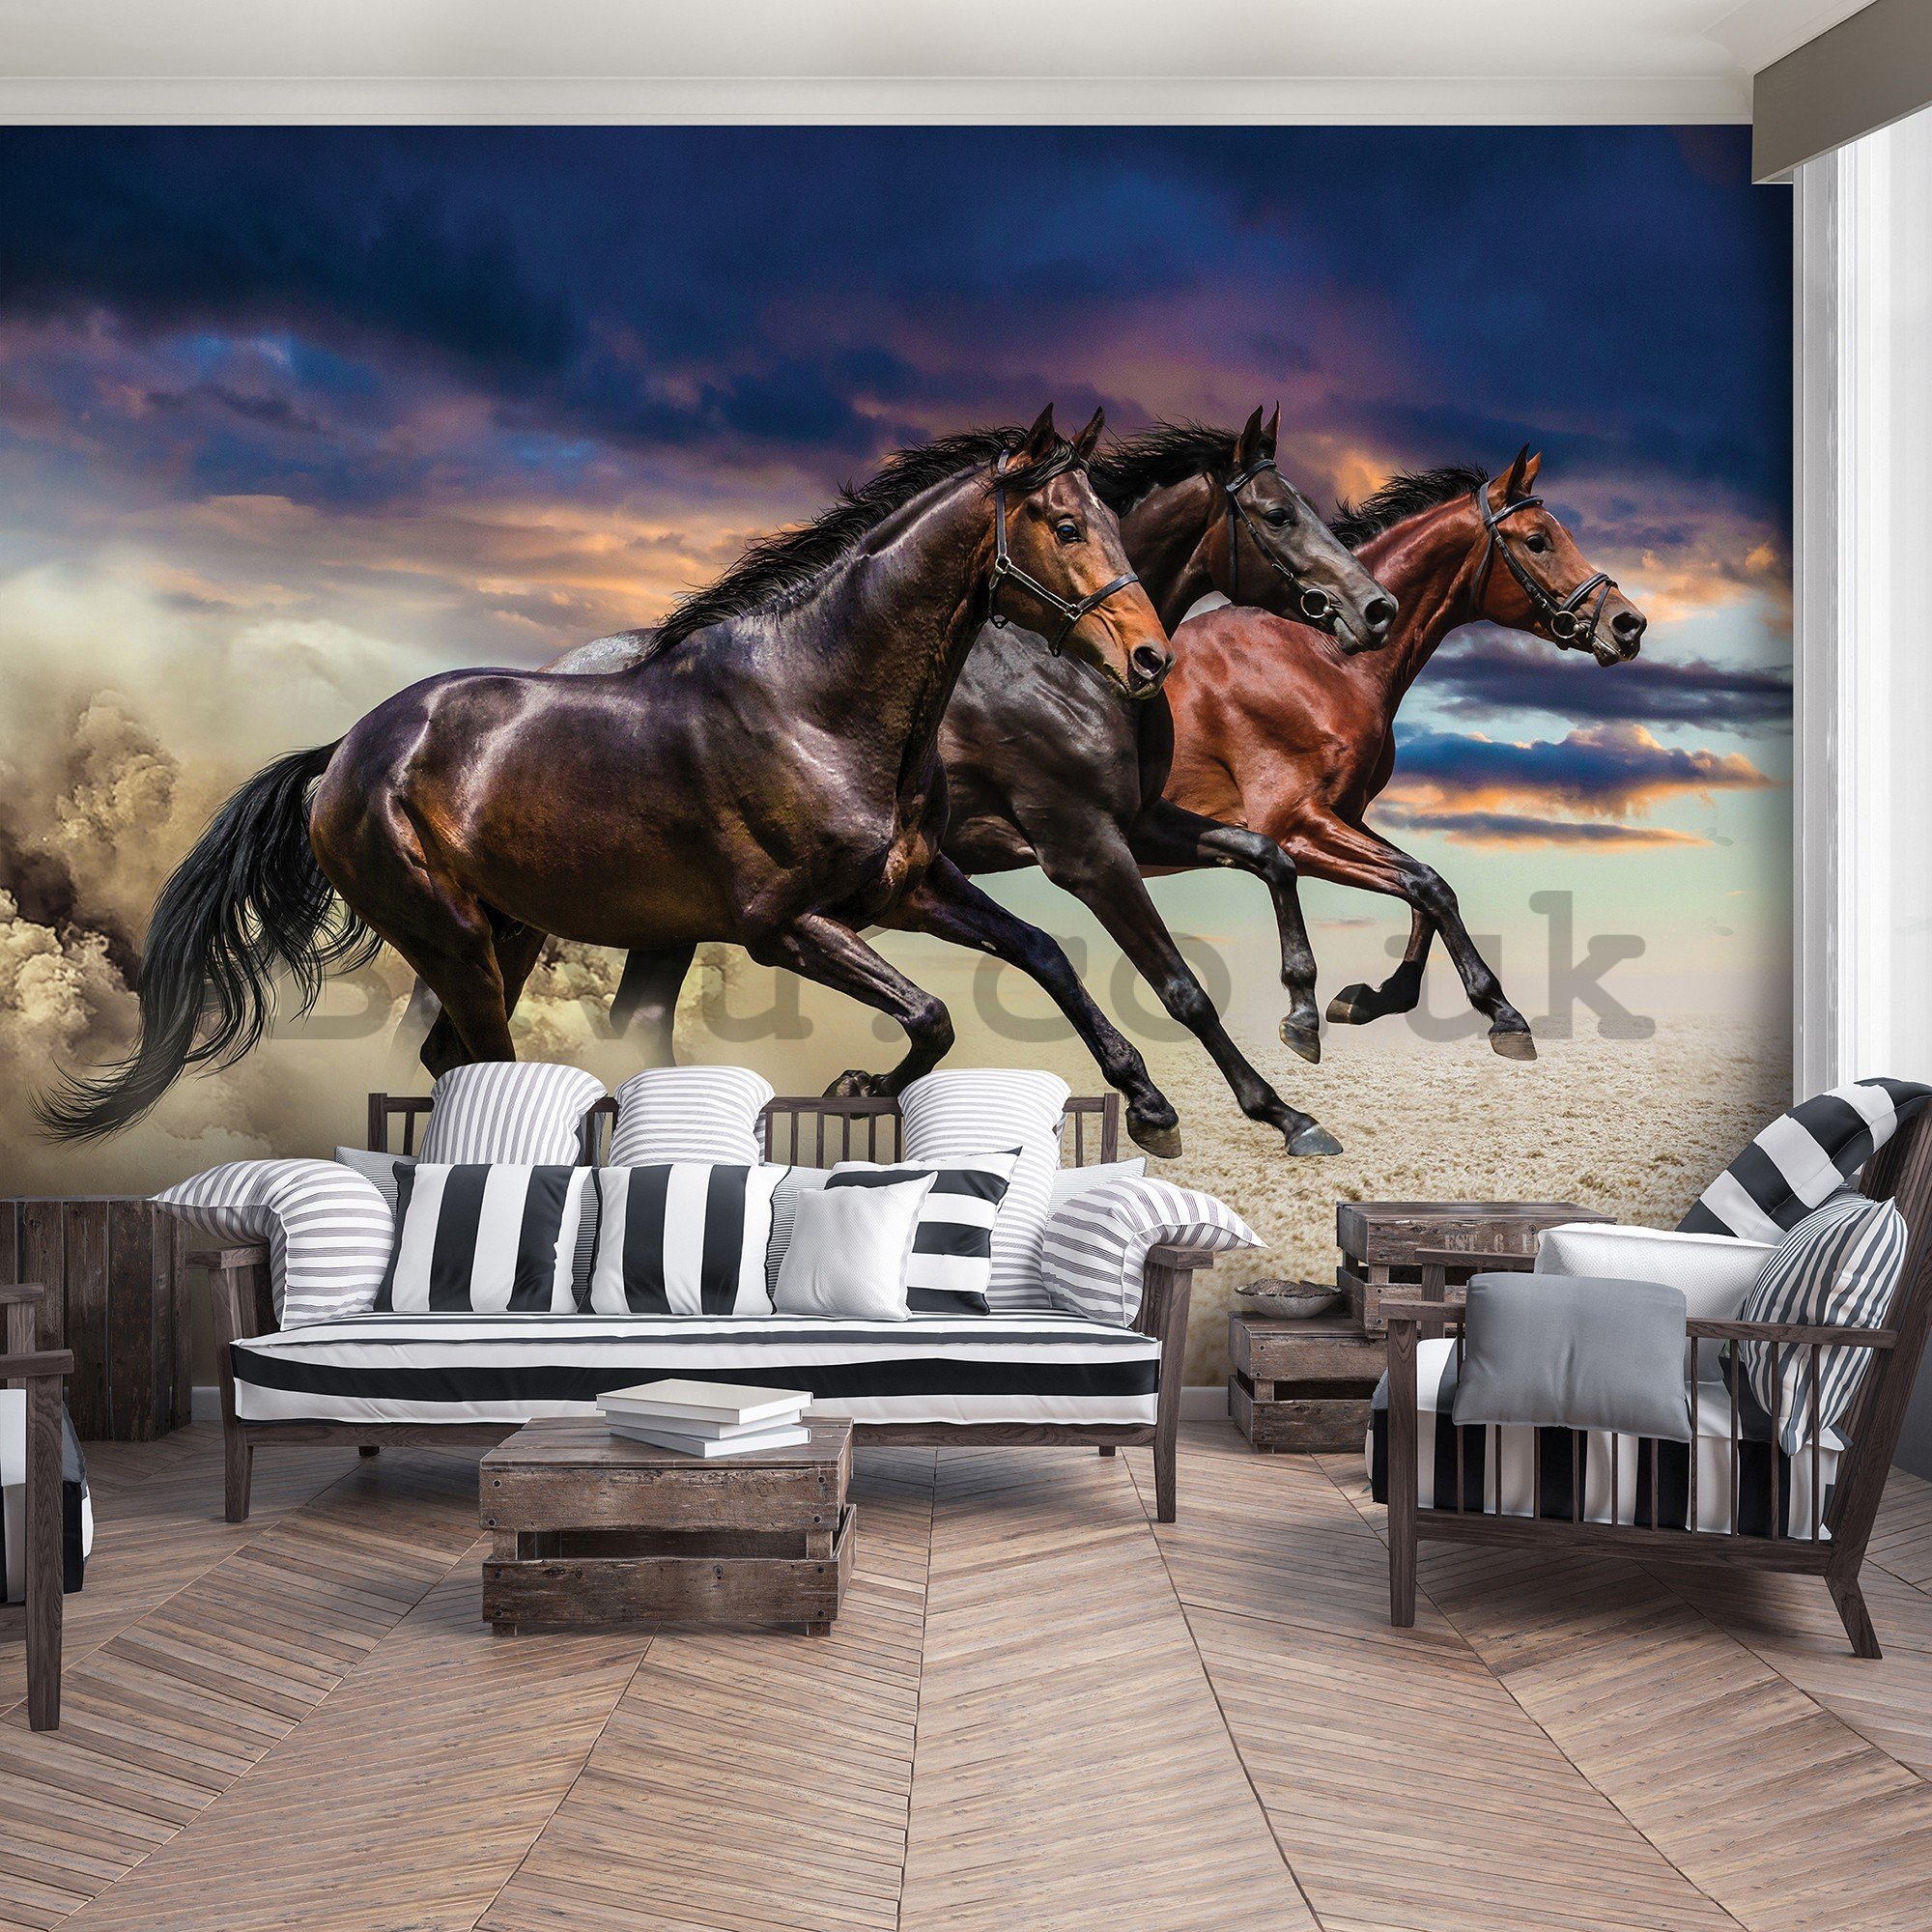 Wall mural vlies: Galloping horses - 416x254 cm